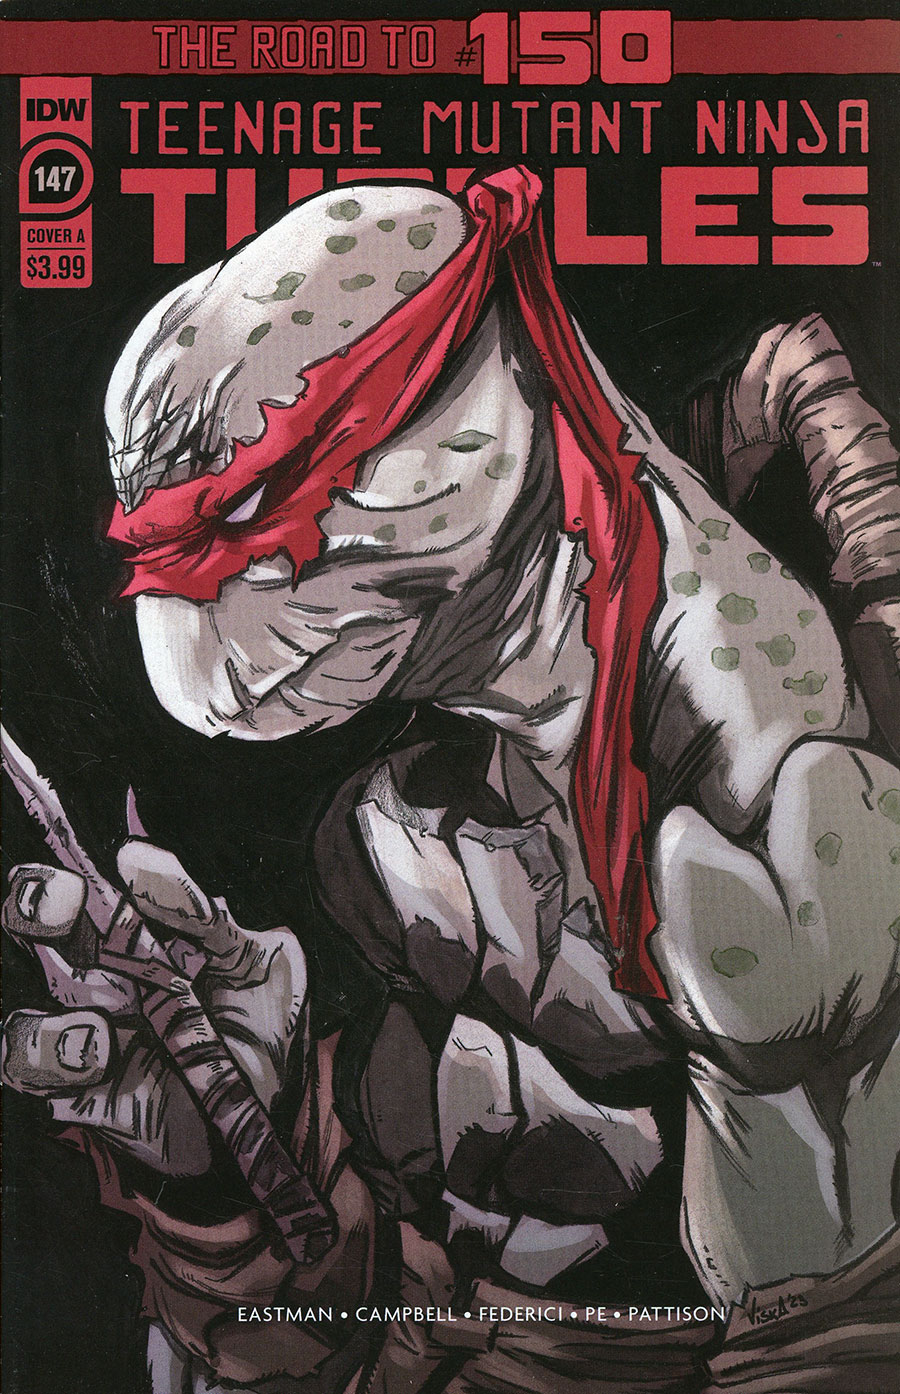 Teenage Mutant Ninja Turtles Vol 5 #147 Cover A Regular Vincenzo Federici Cover